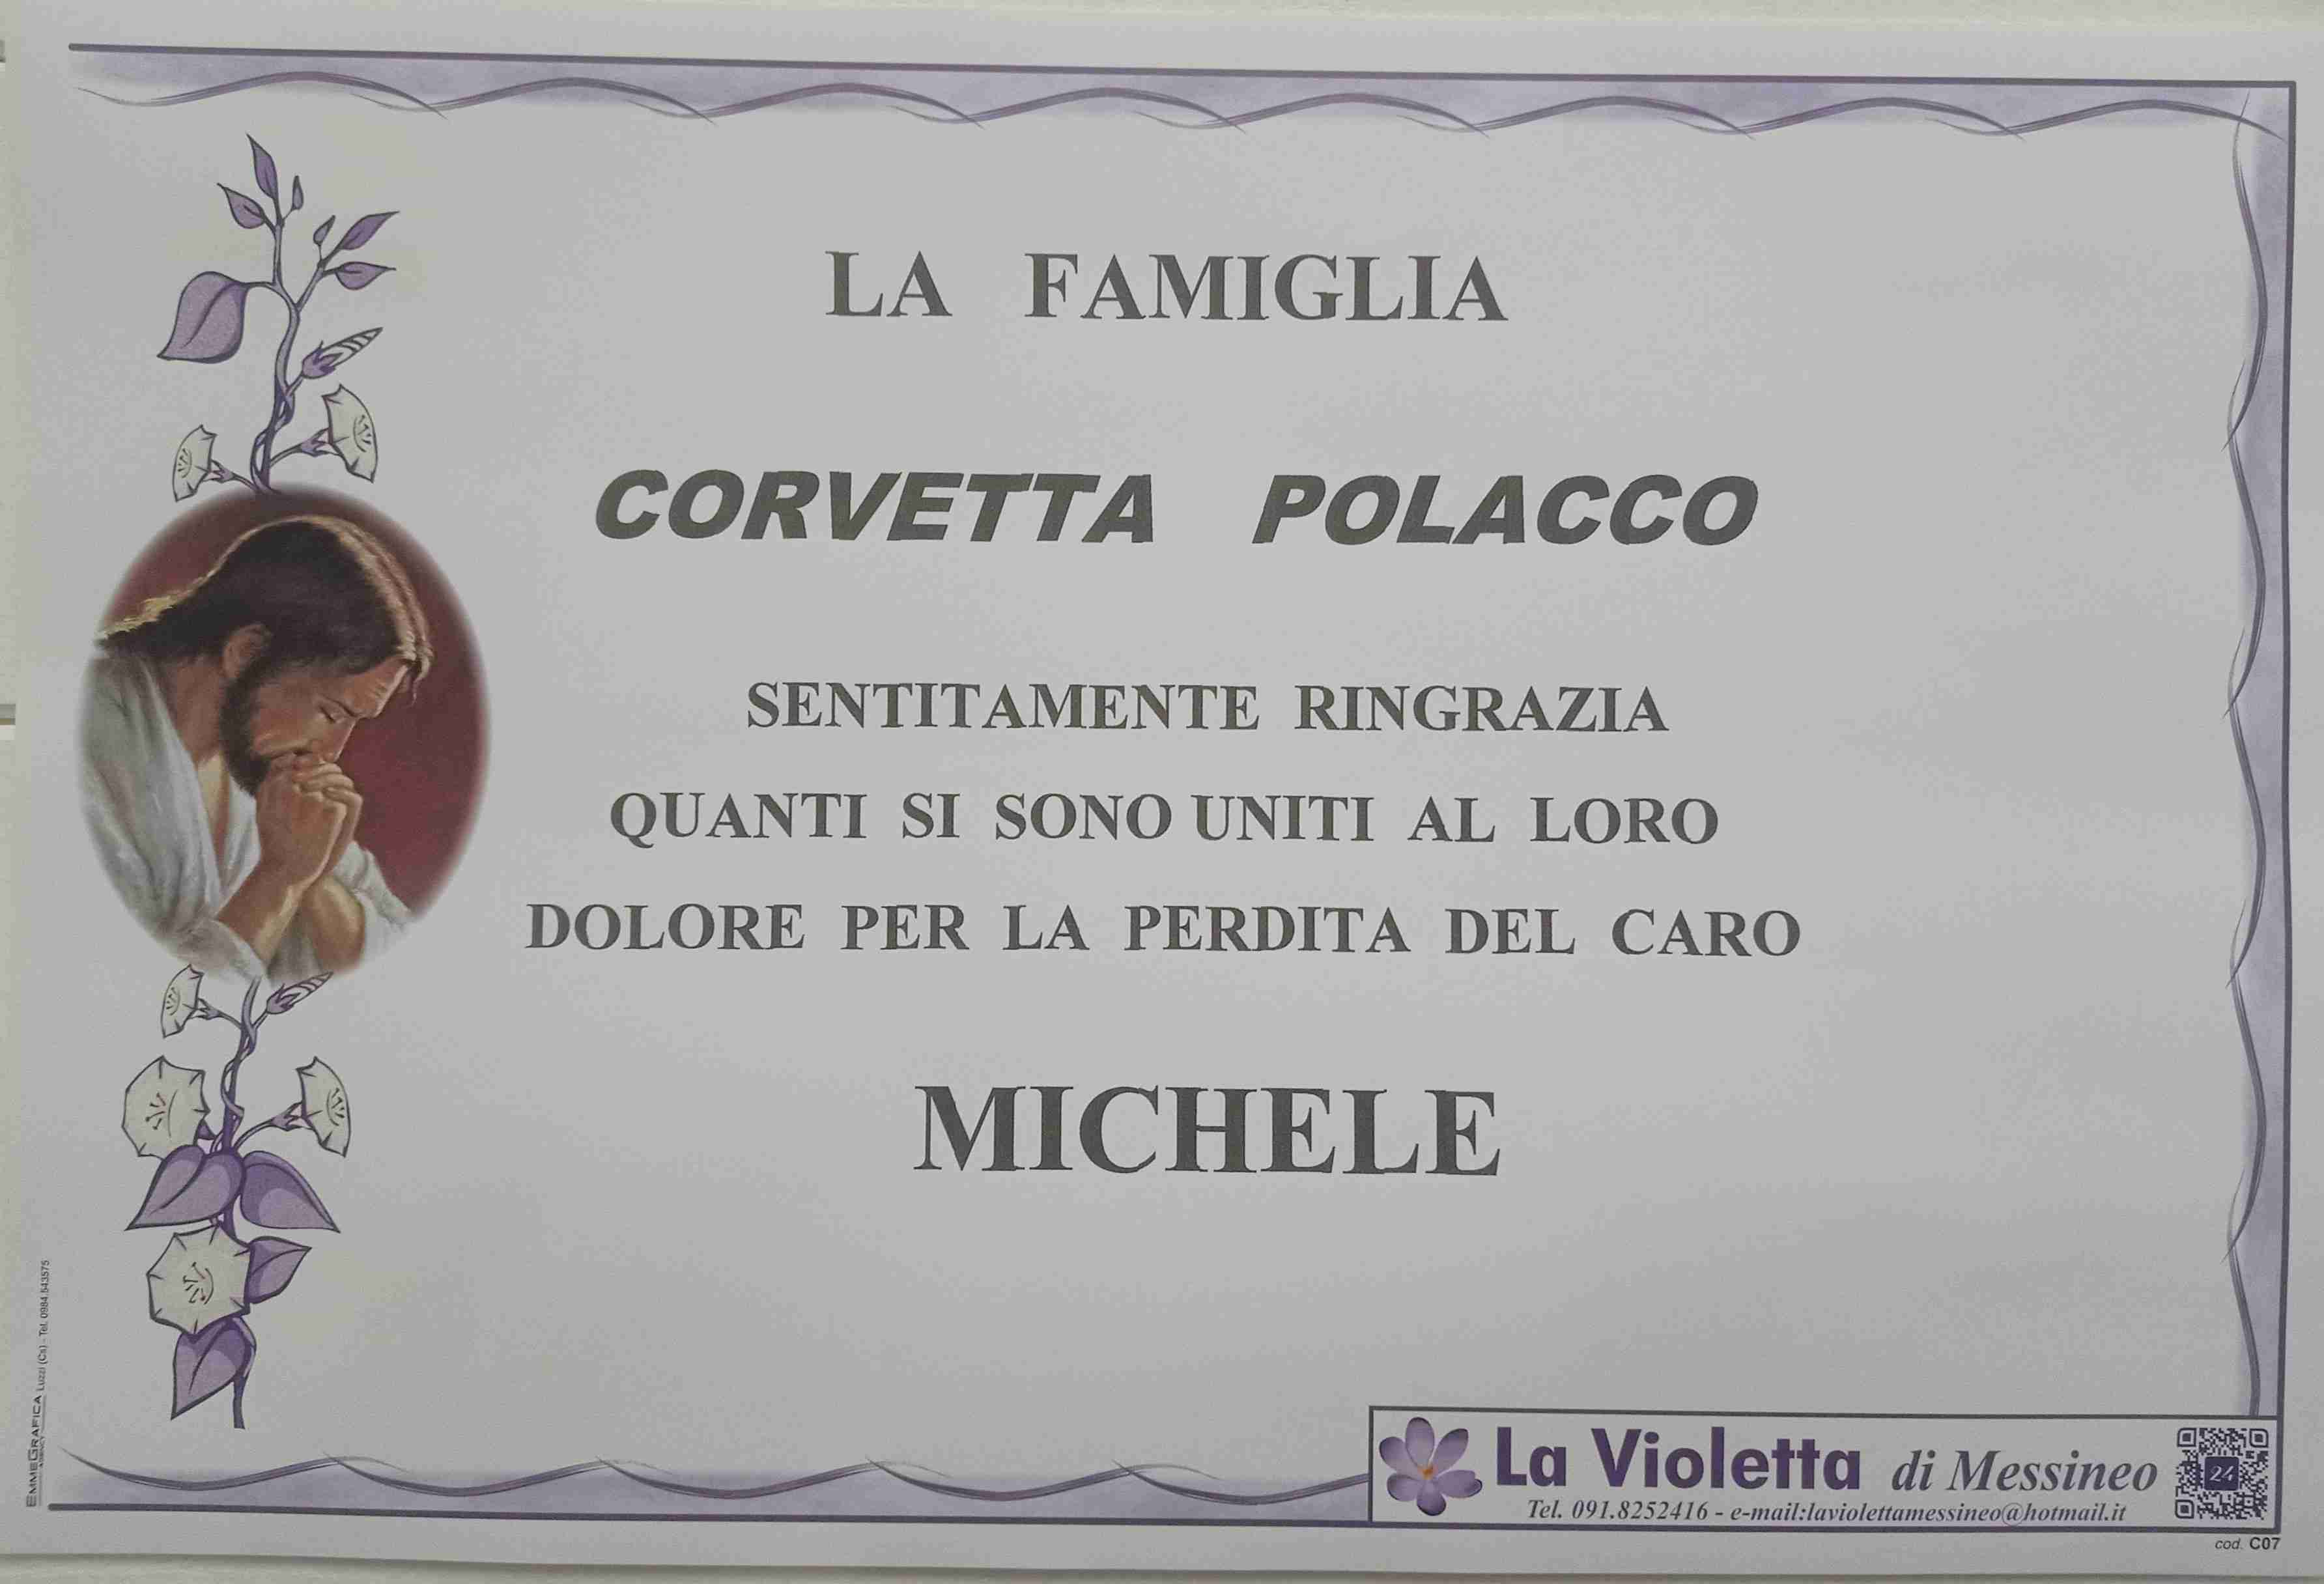 Michele Corvetta